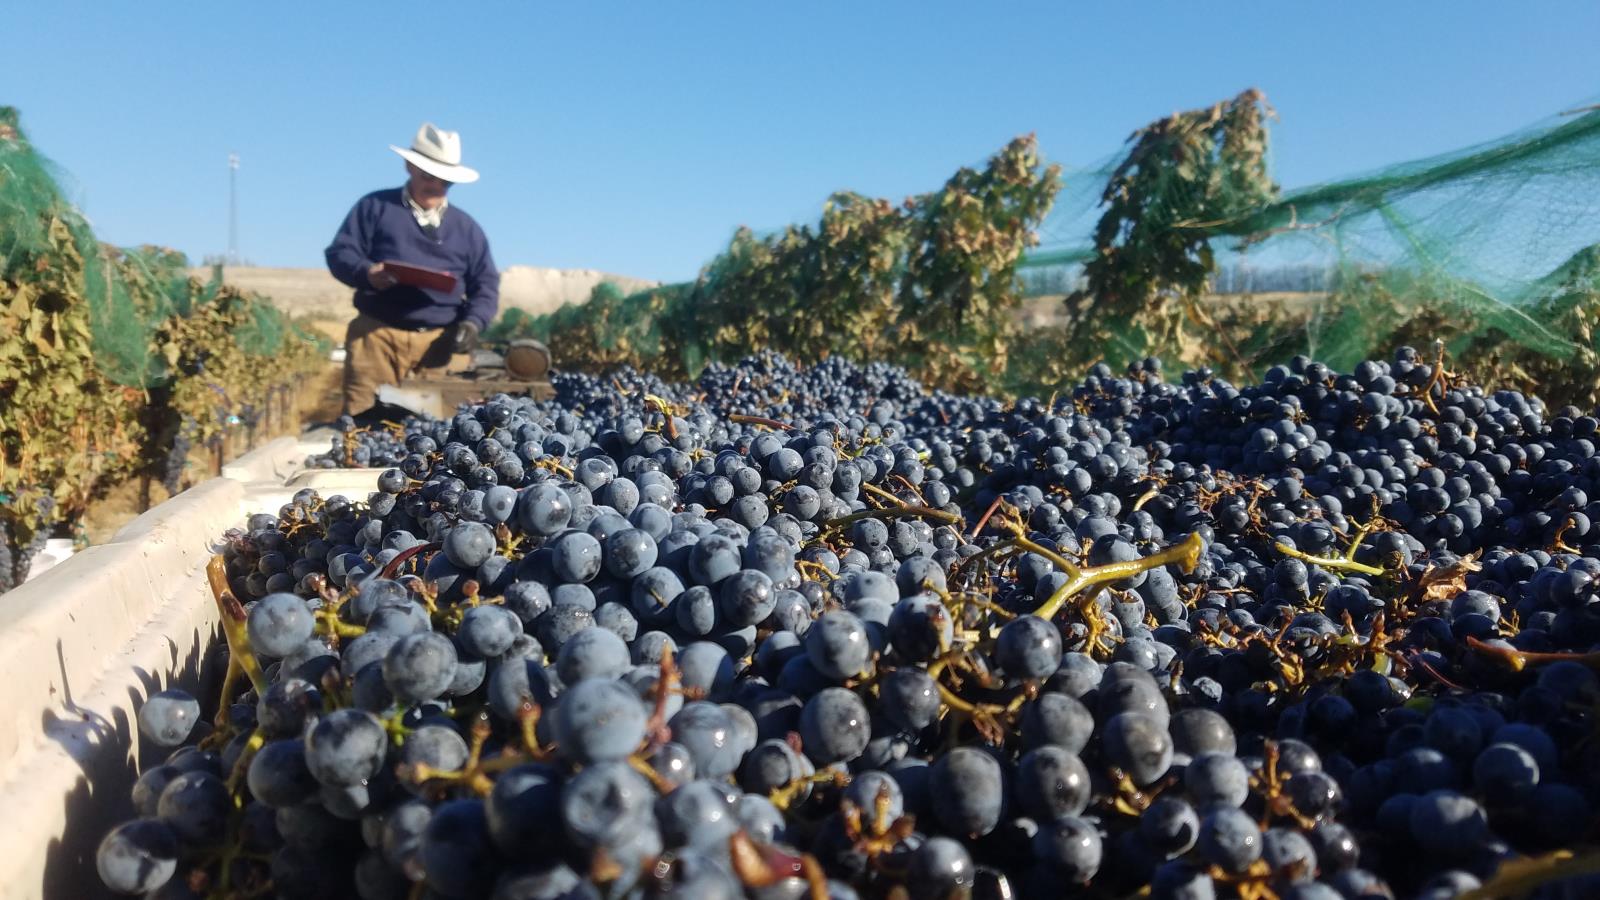 Wine grapes are harvestd in a southwestern Idaho vineyard.